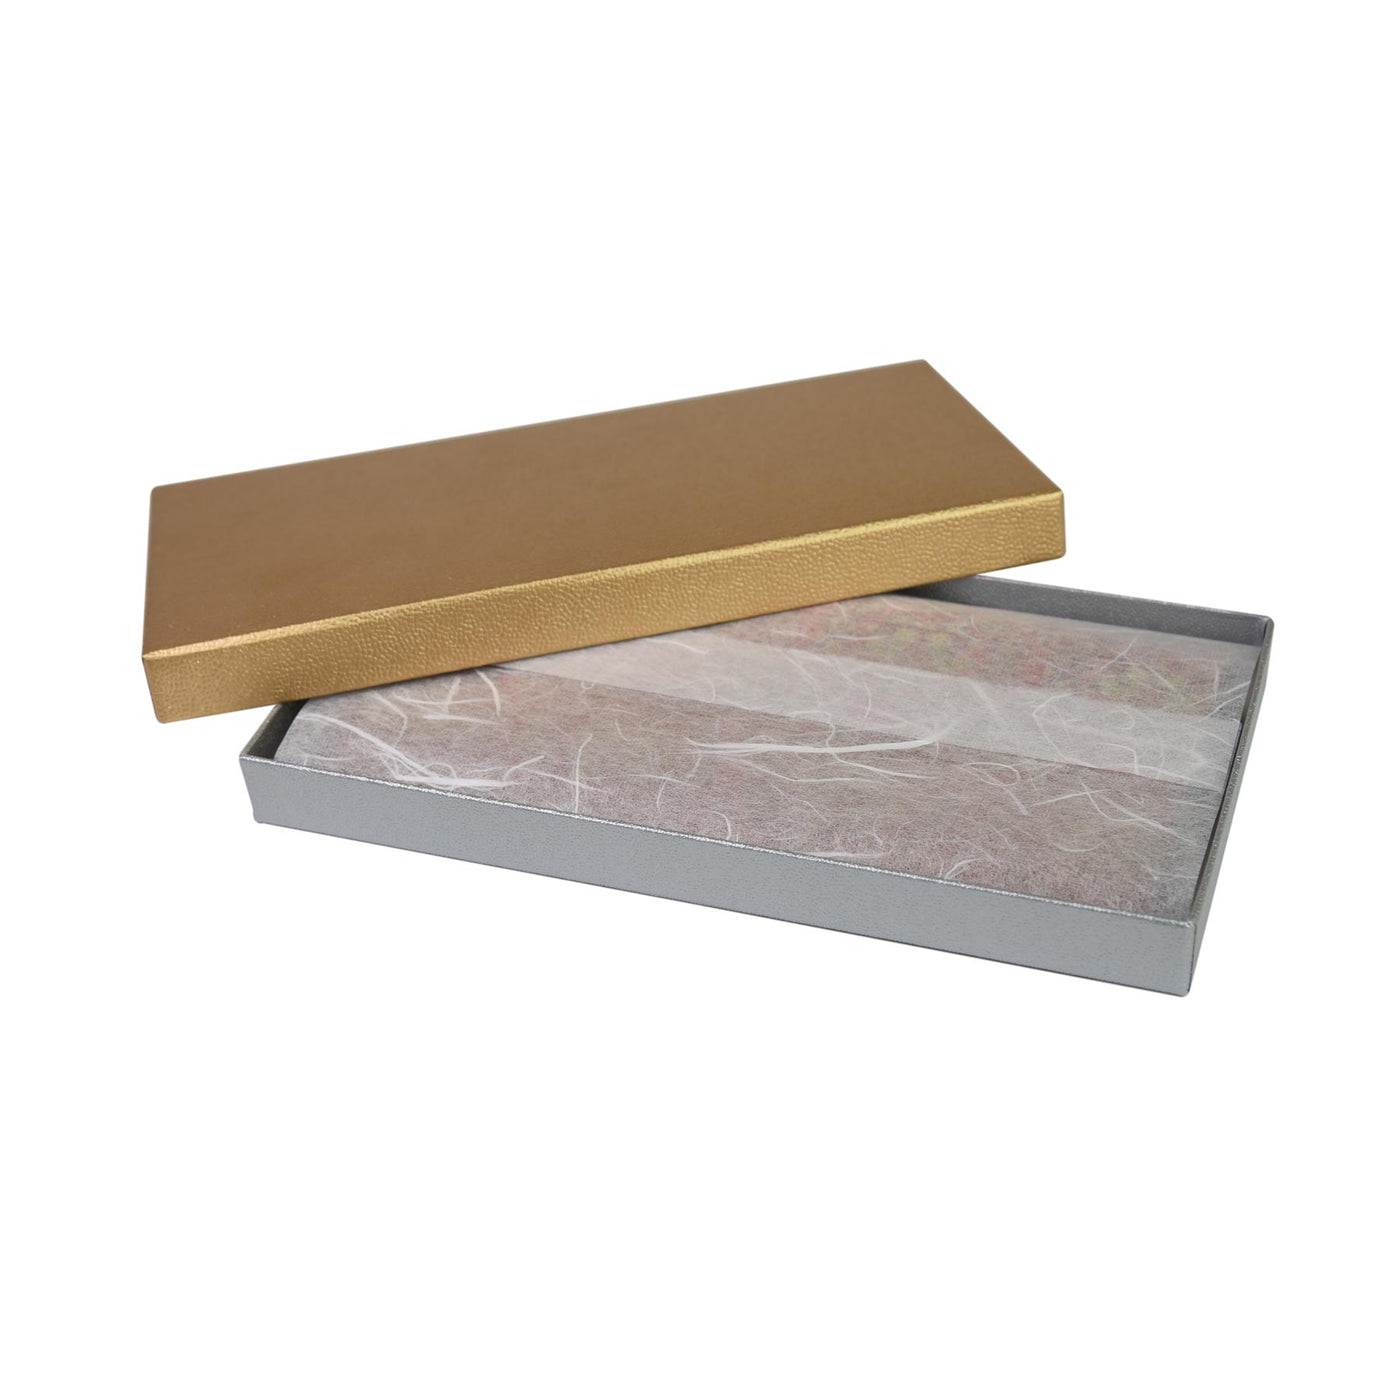 Oshidori Silk Brocade Leather Wallet Gift Box